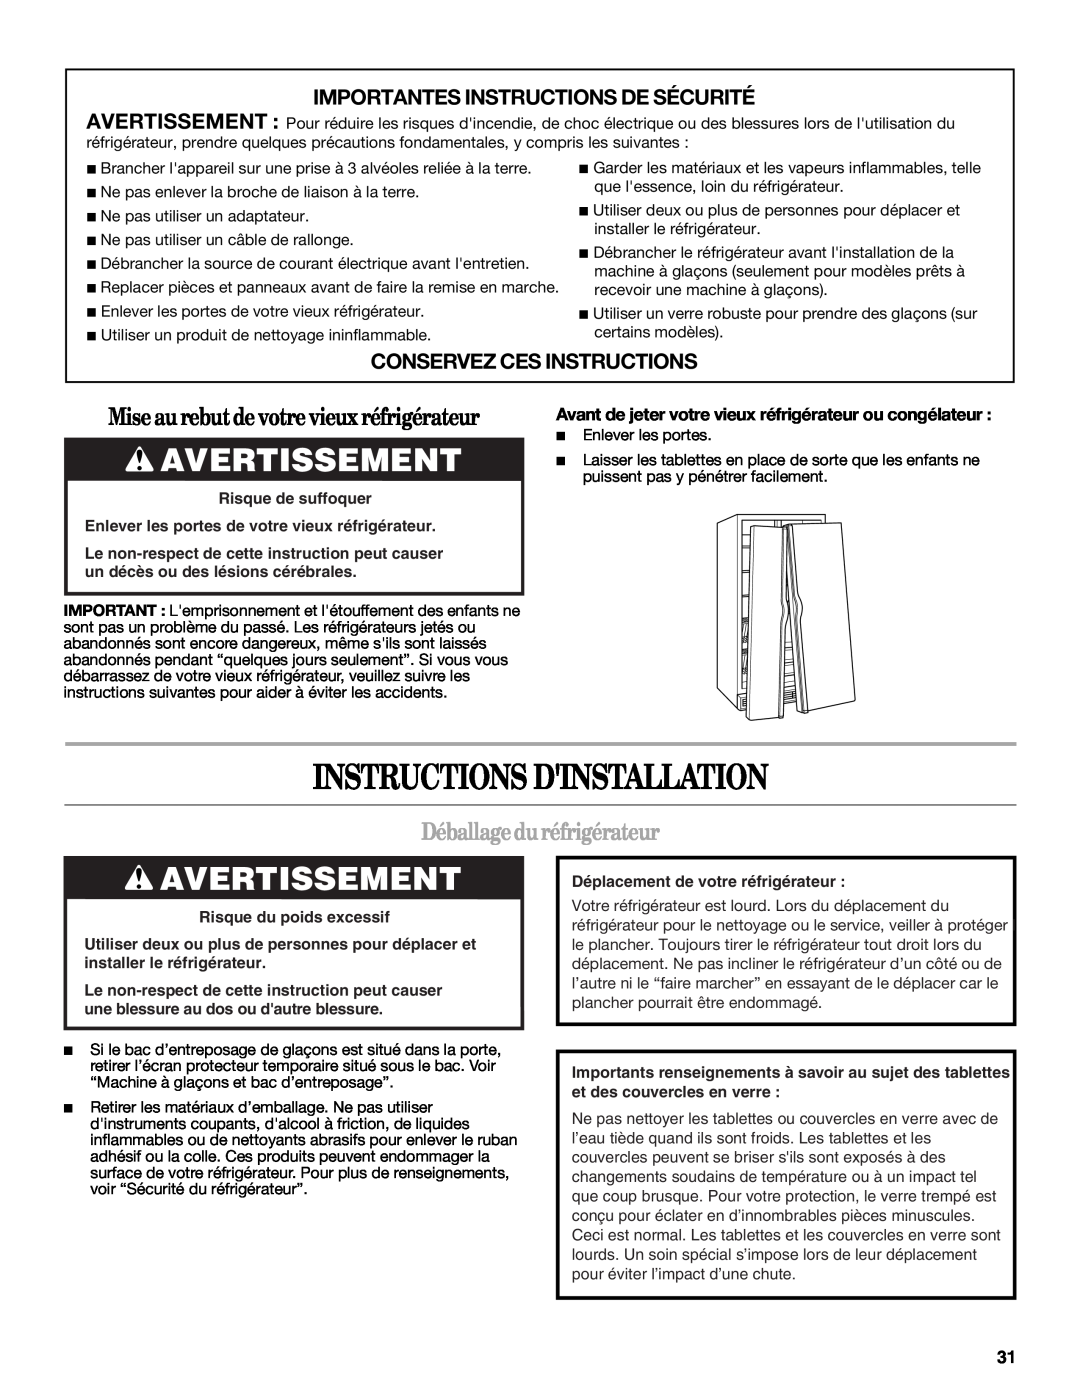 Whirlpool ED2JHGXRB00 warranty Instructions Dinstallation, Avertissement, Miseau rebutdevotrevieuxréfrigérateur 